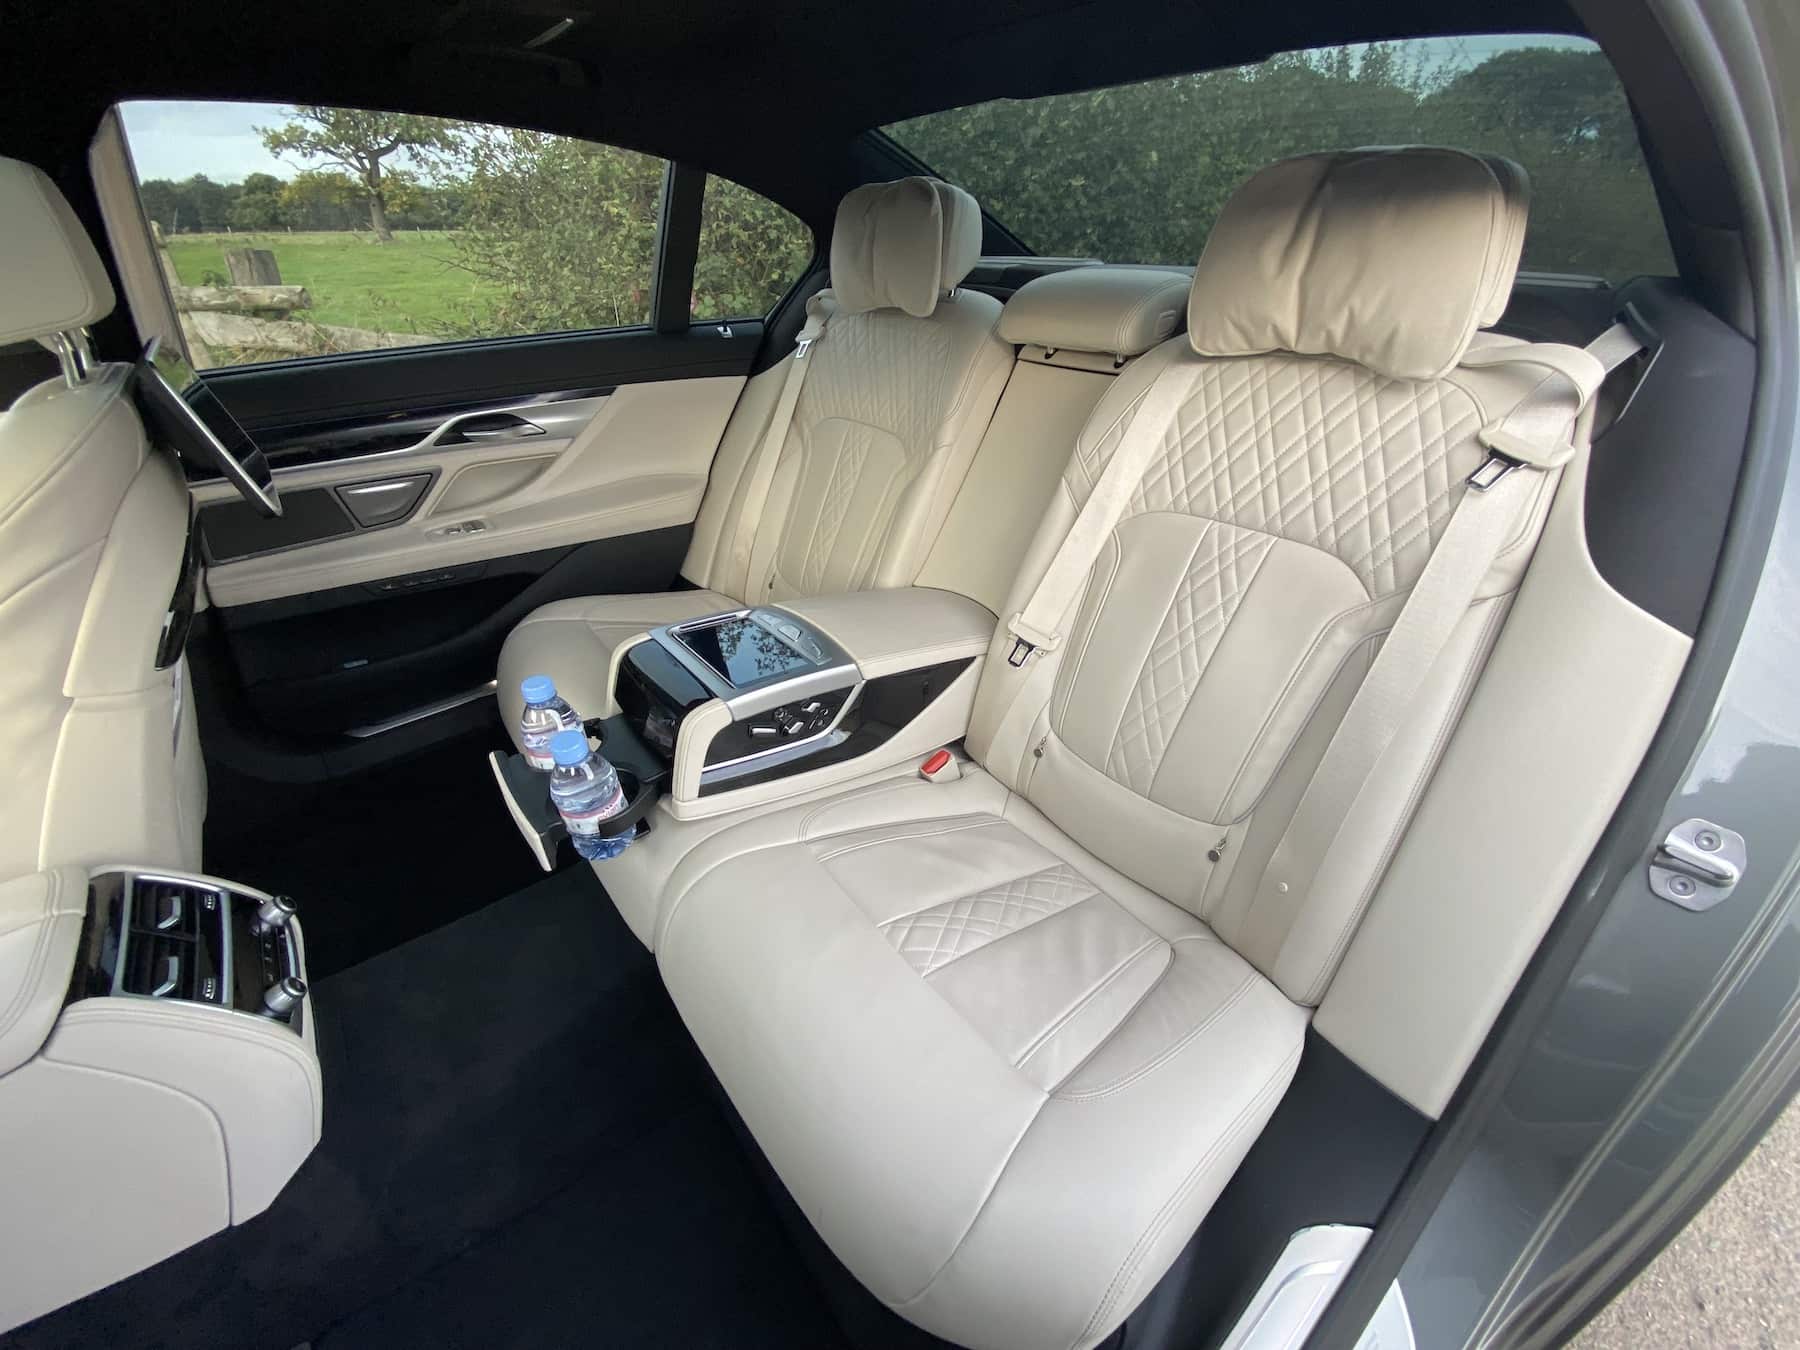 BMW 7 series Chauffeur car luxury interior